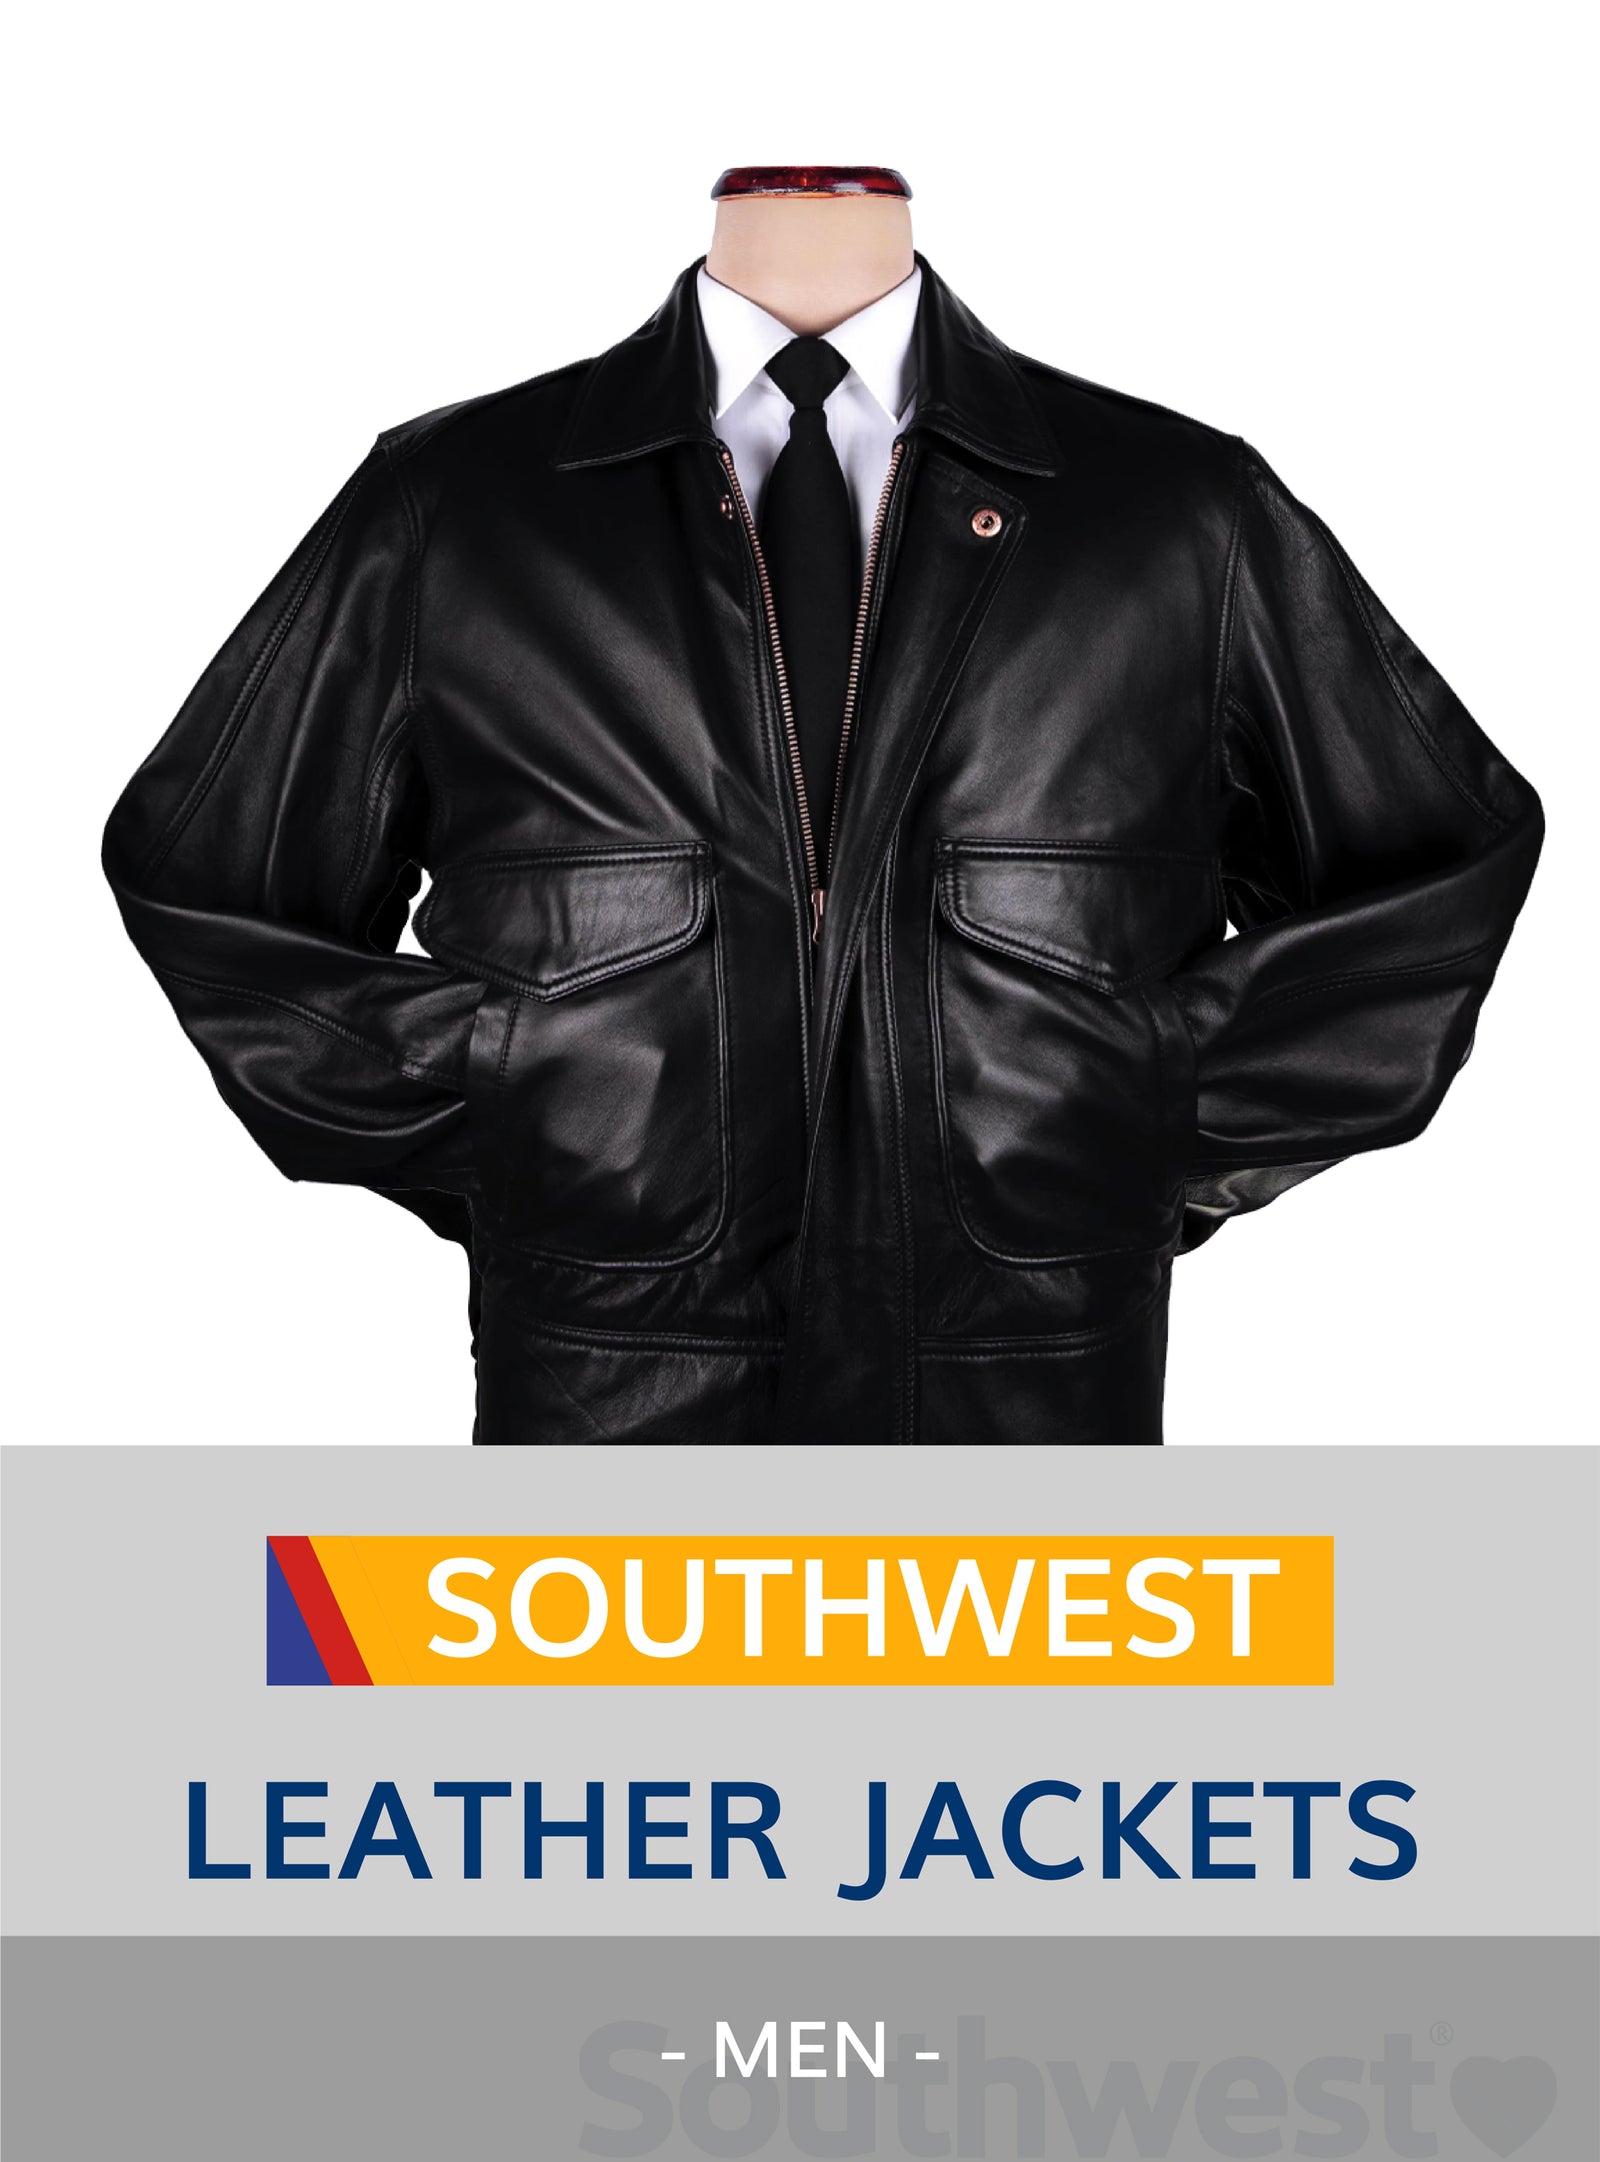 Southwest Leather Jackets for Men